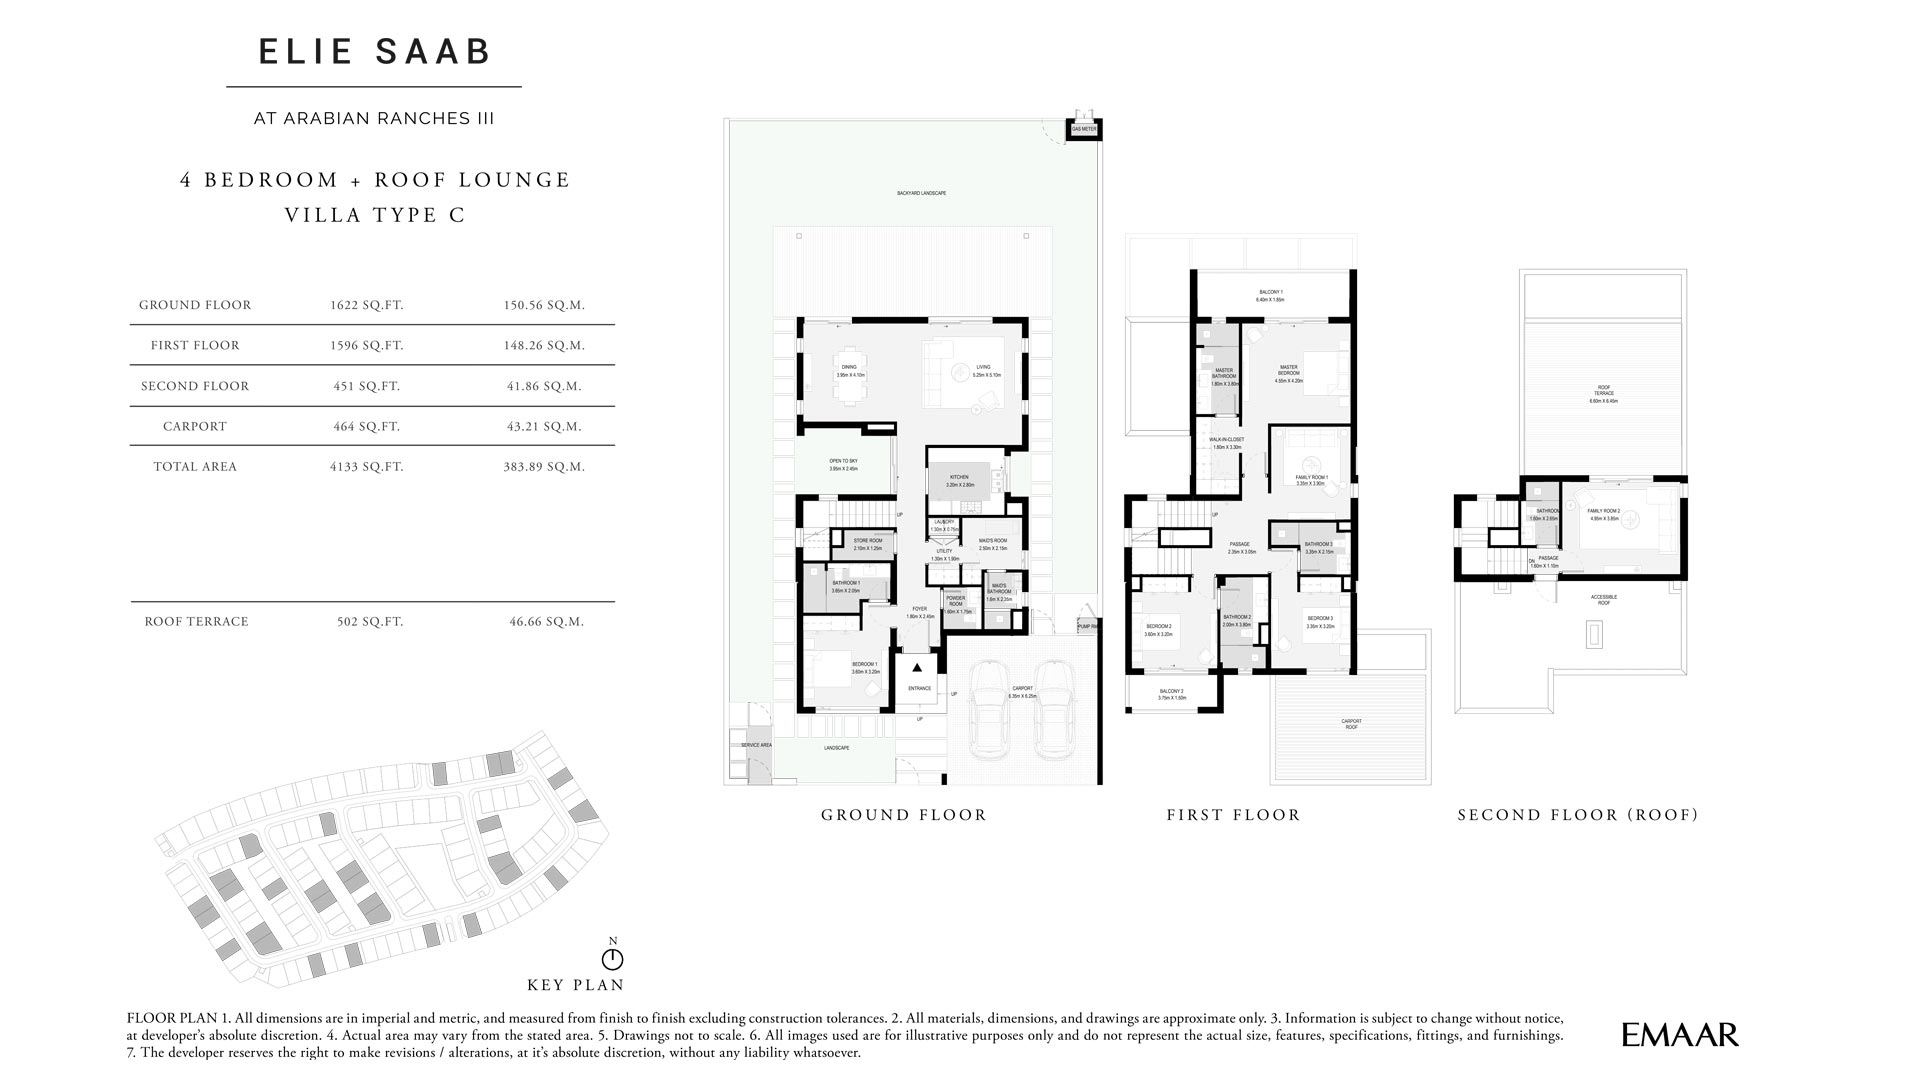 4 Bedroom Type C Elie Saab Villas Floor Plan